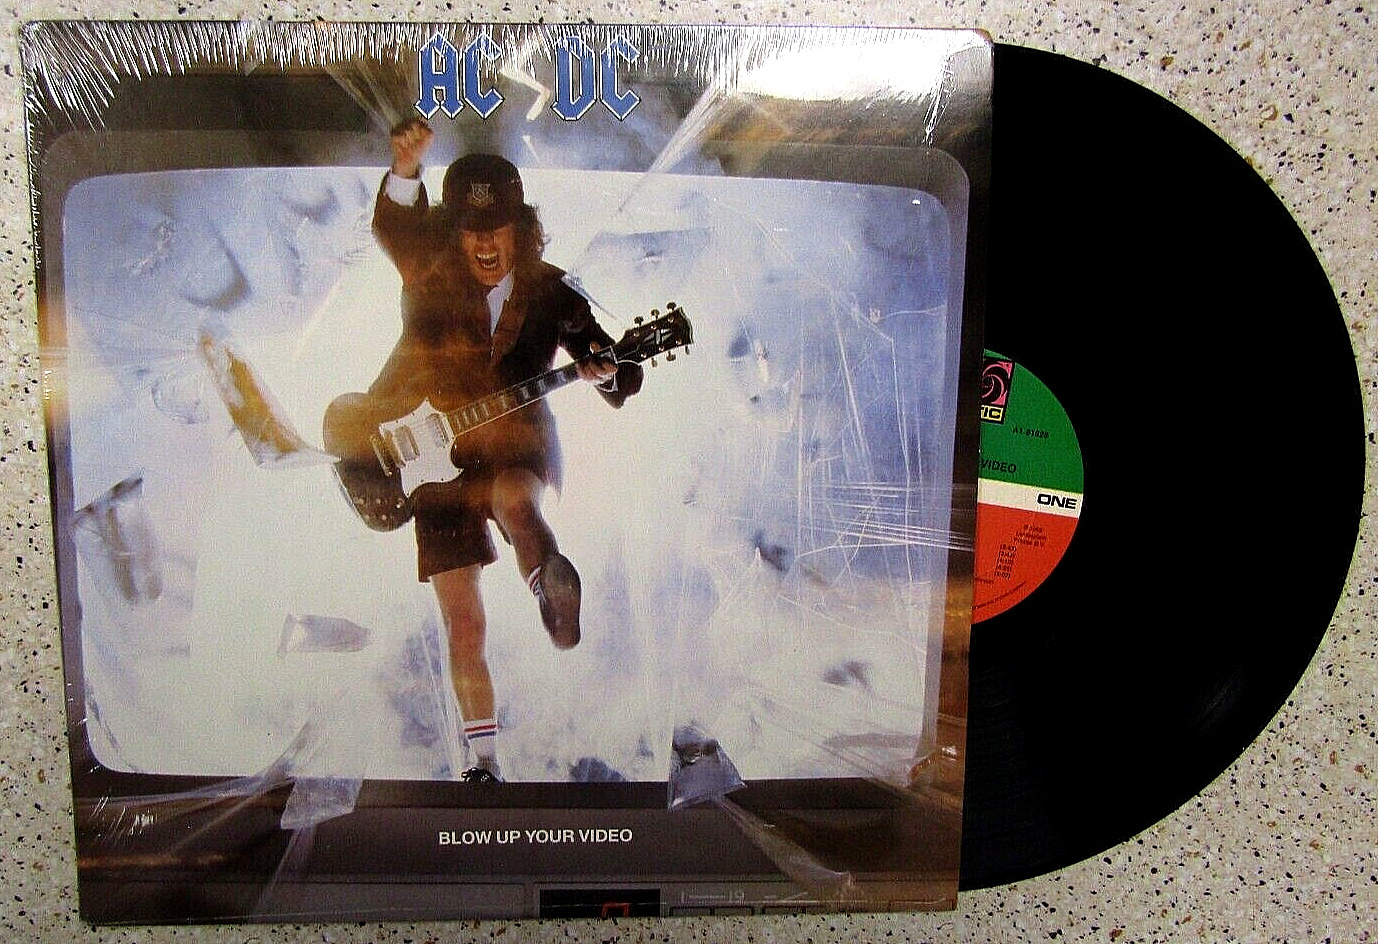 VINYL RECORD ALBUM,AC/DC-BLOW UP YOUR VIDEO,A1-81828,HEATSEEKER,1988